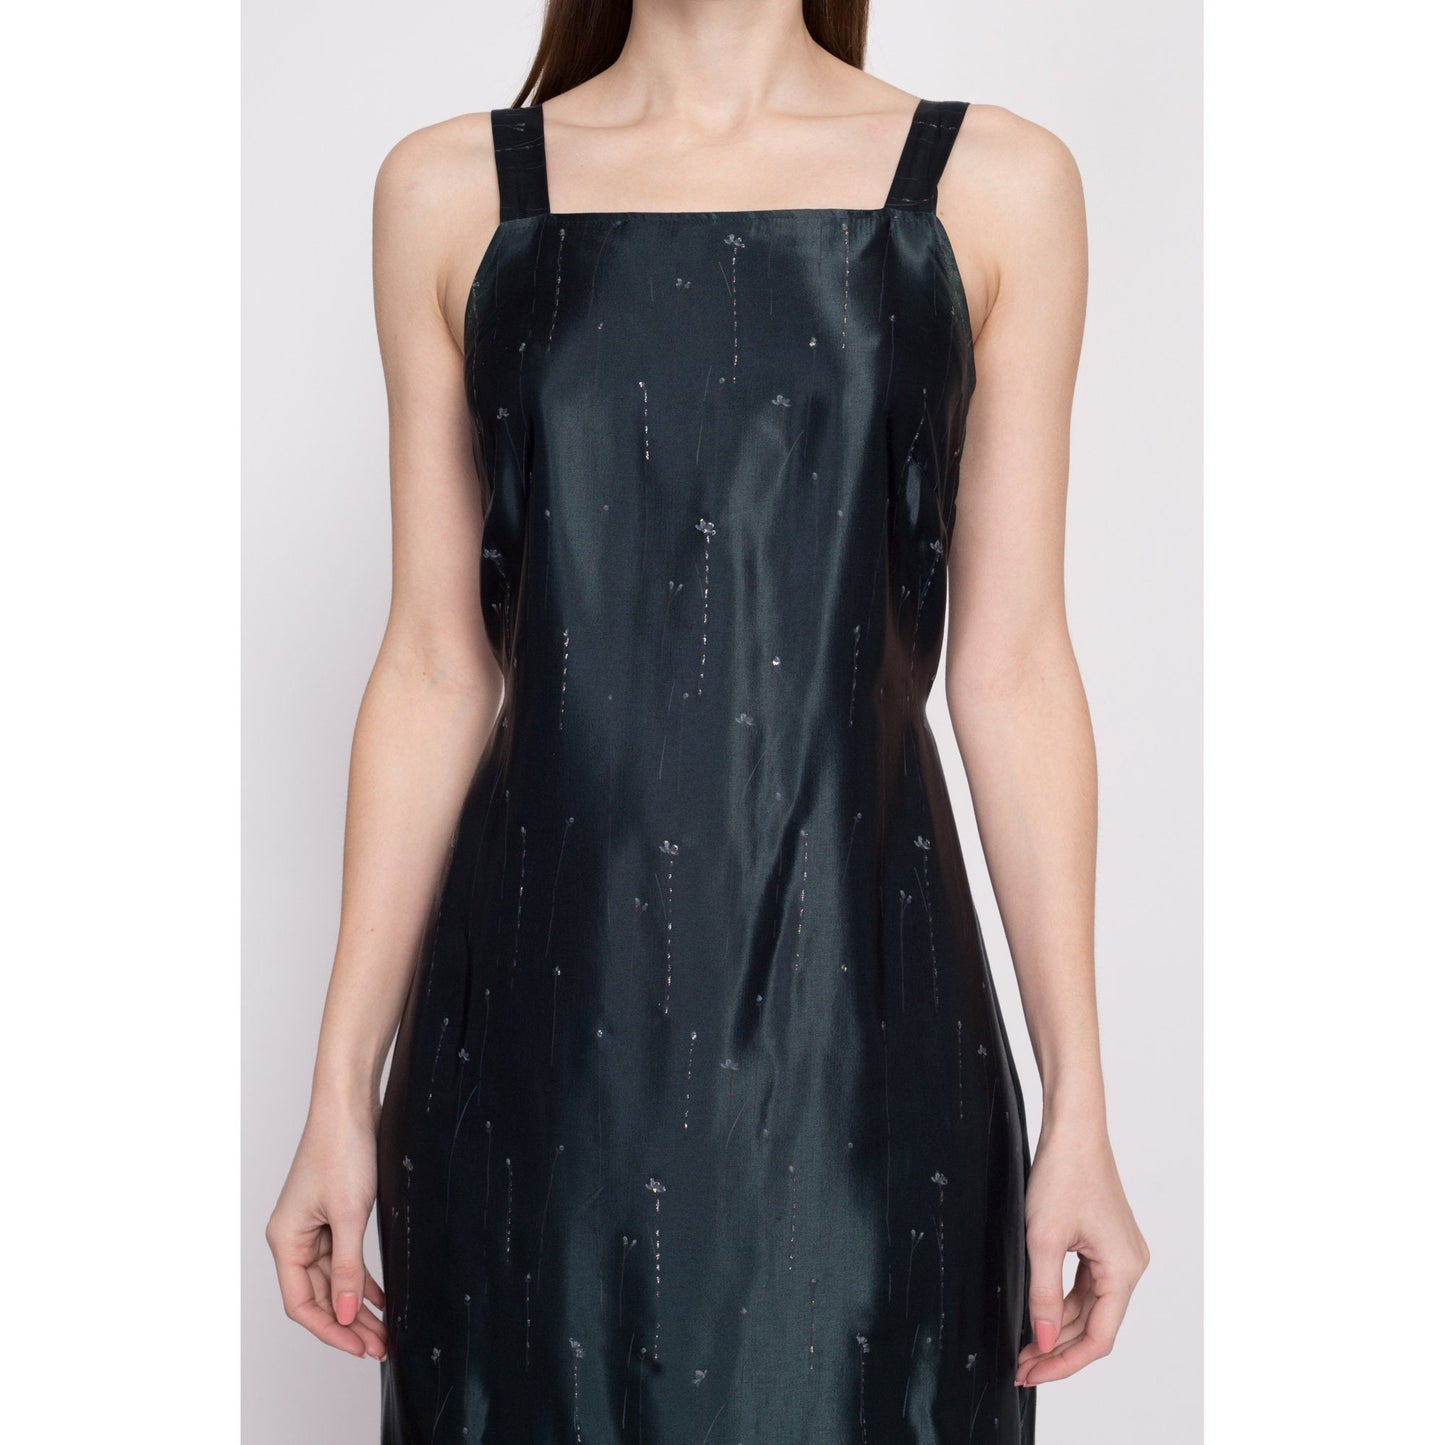 90s Dark Emerald Floral Satin Midi Dress - Small | Vintage Metallic Flower Print Side Slit Tank Slip Dress